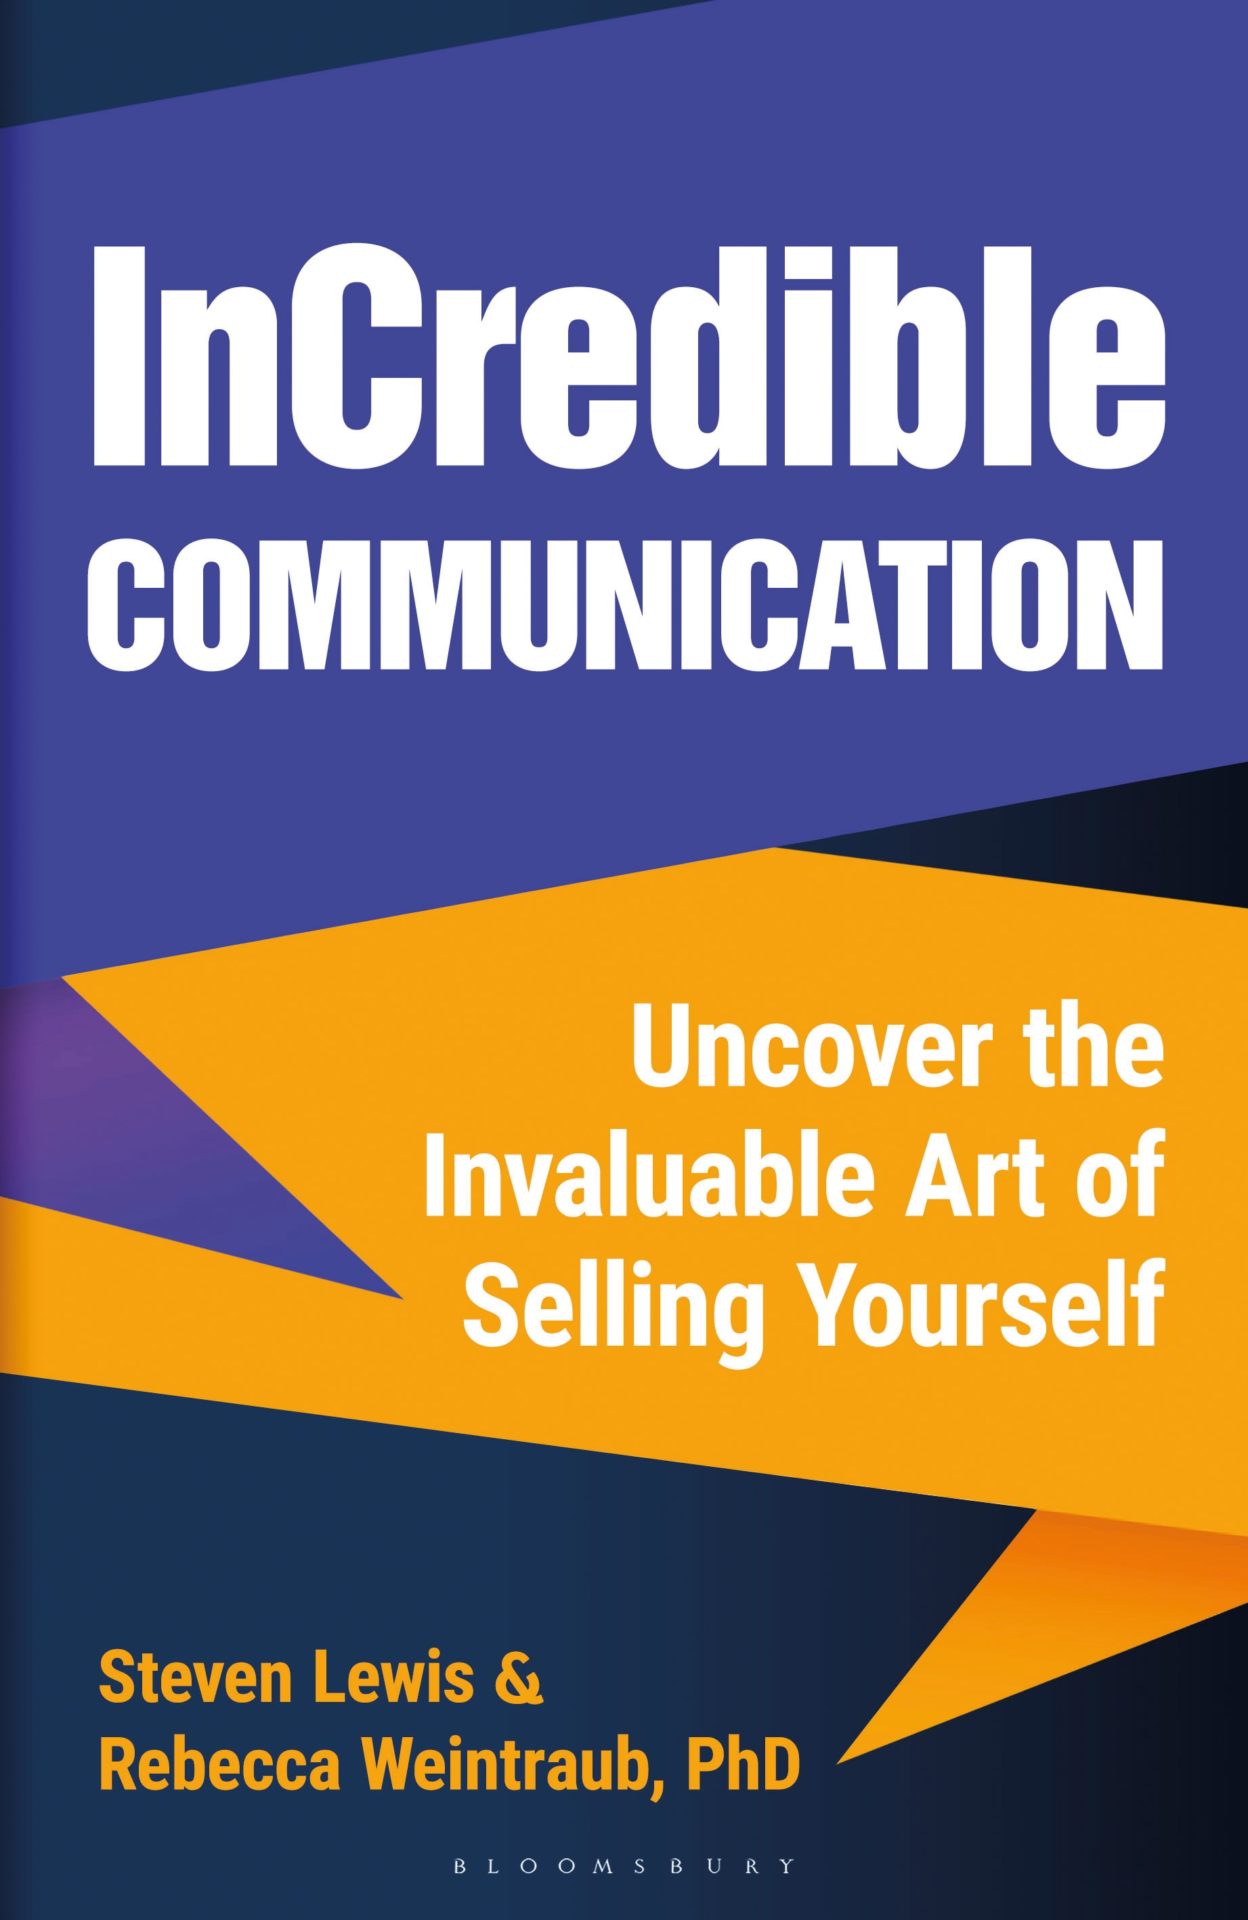 AMBA Book club: InCredible Communication